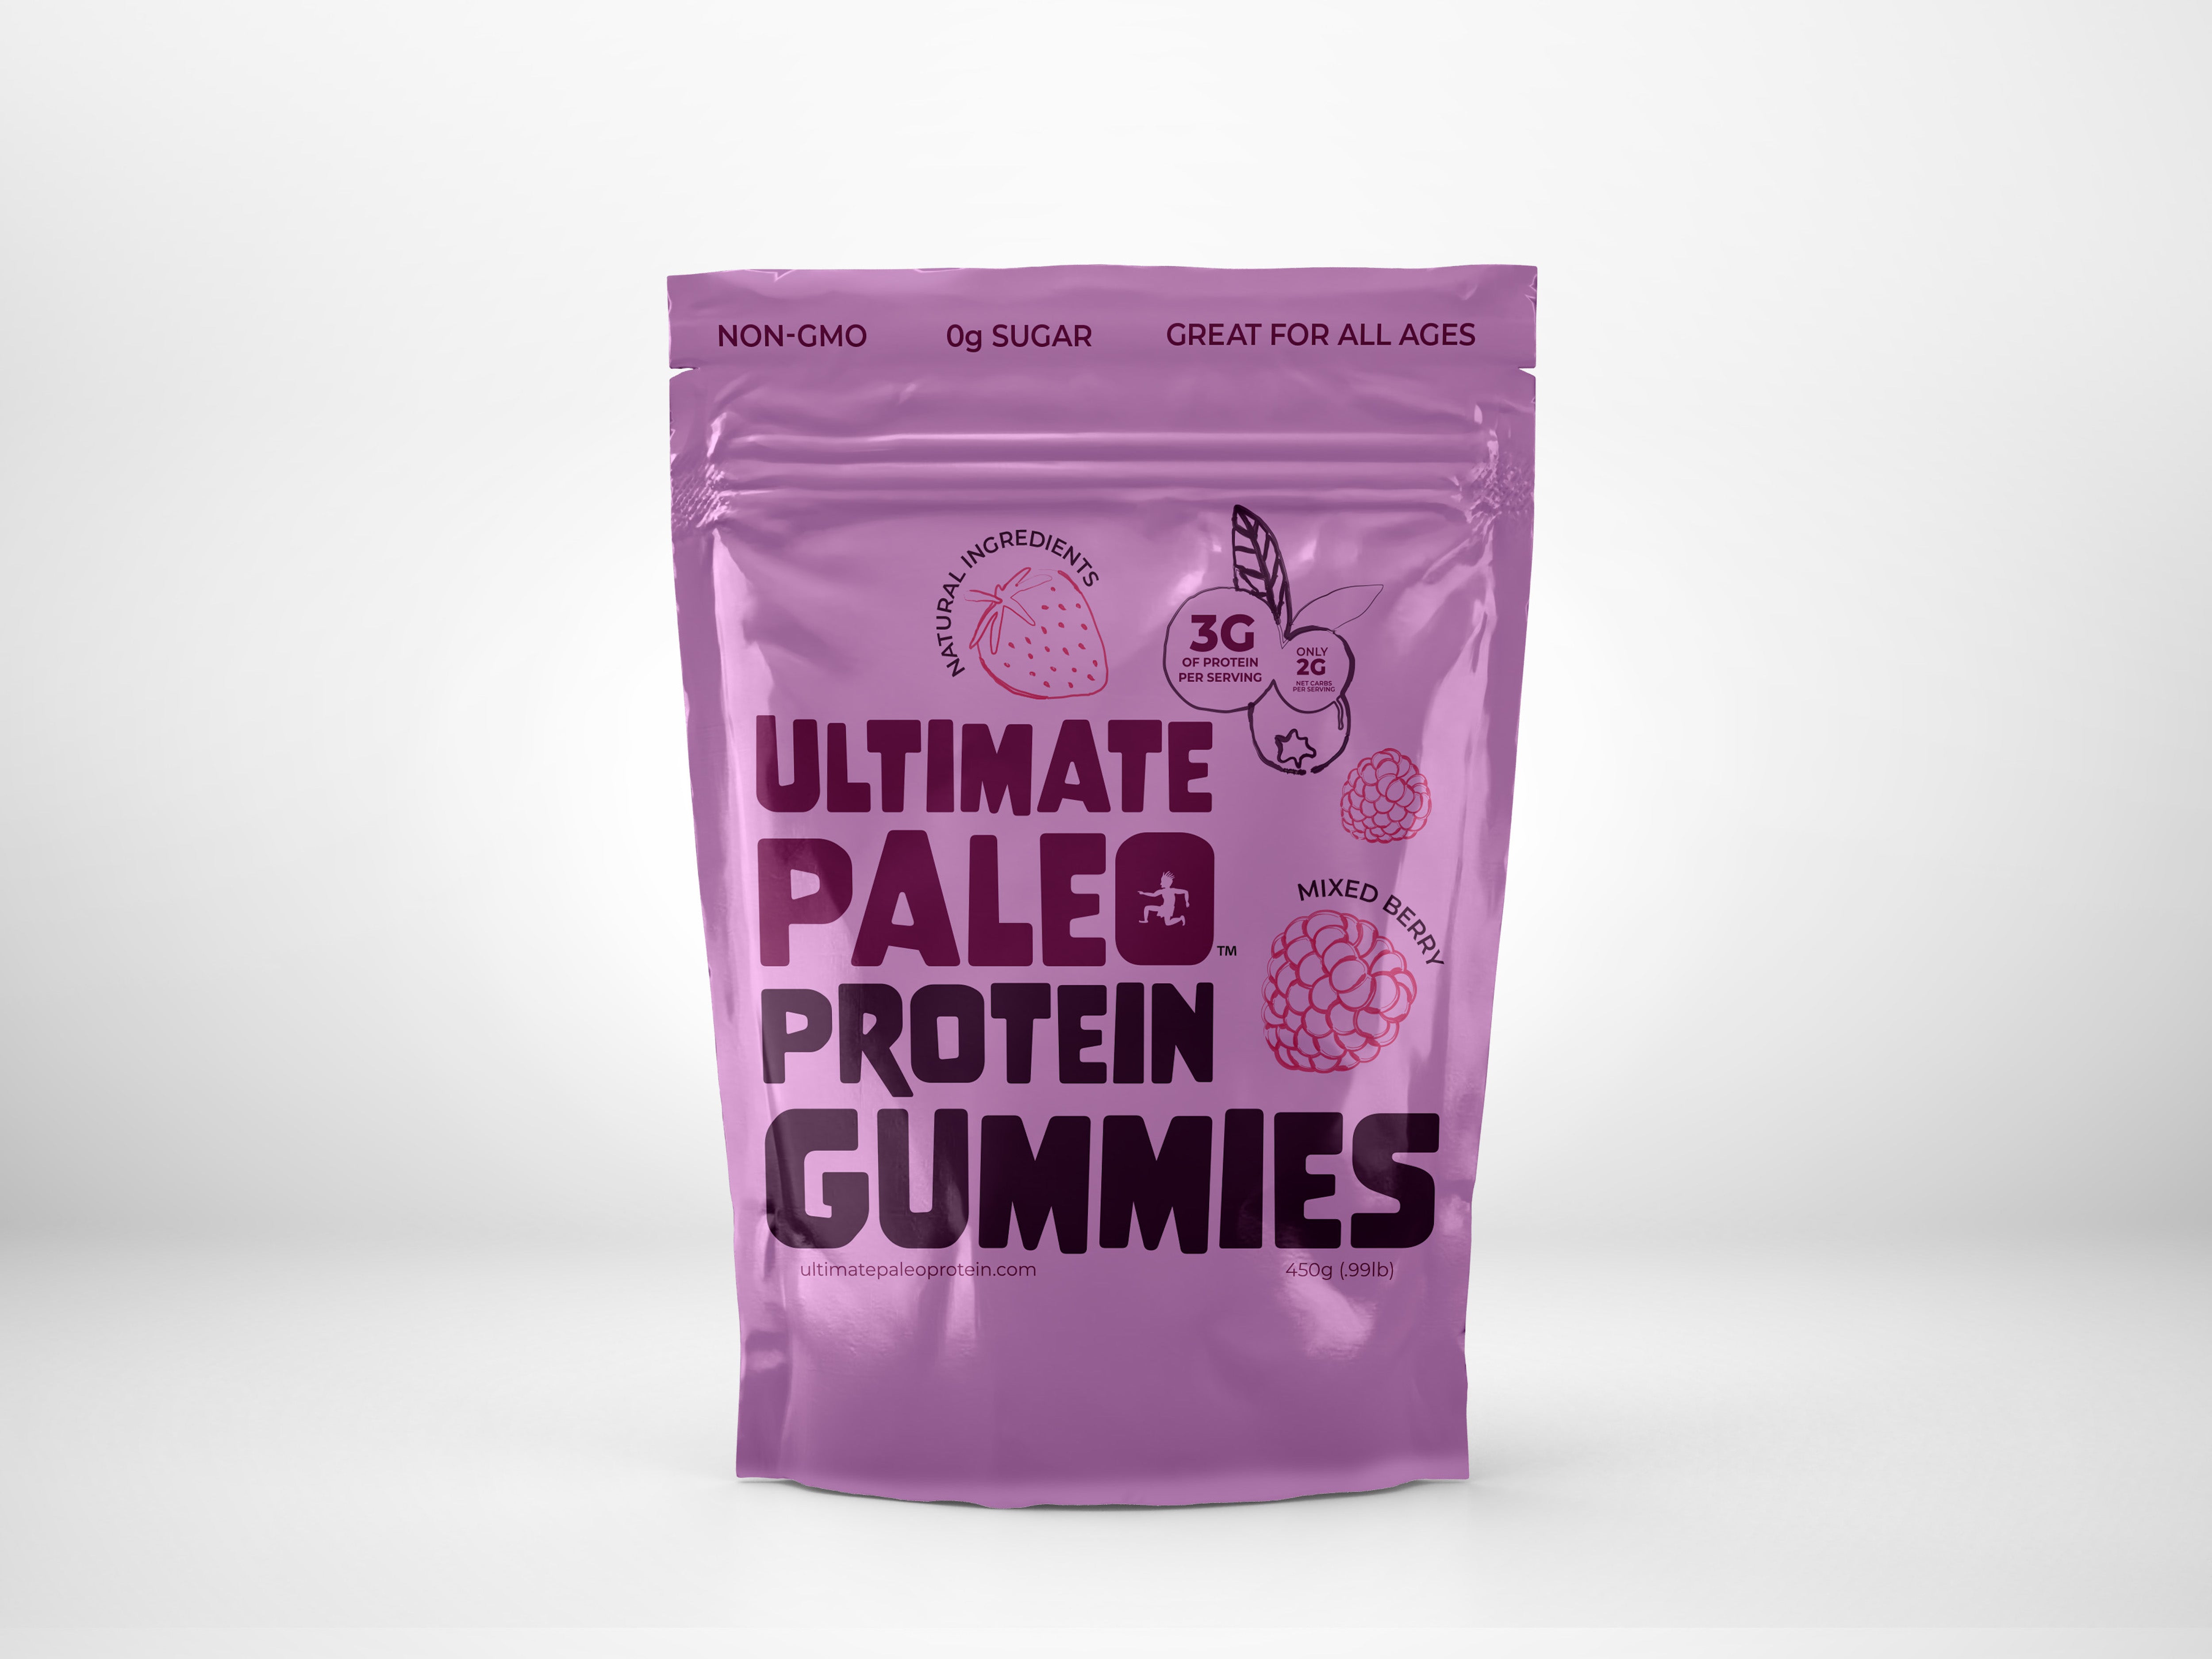 NEW - Ultimate Paleo Protein Gummies